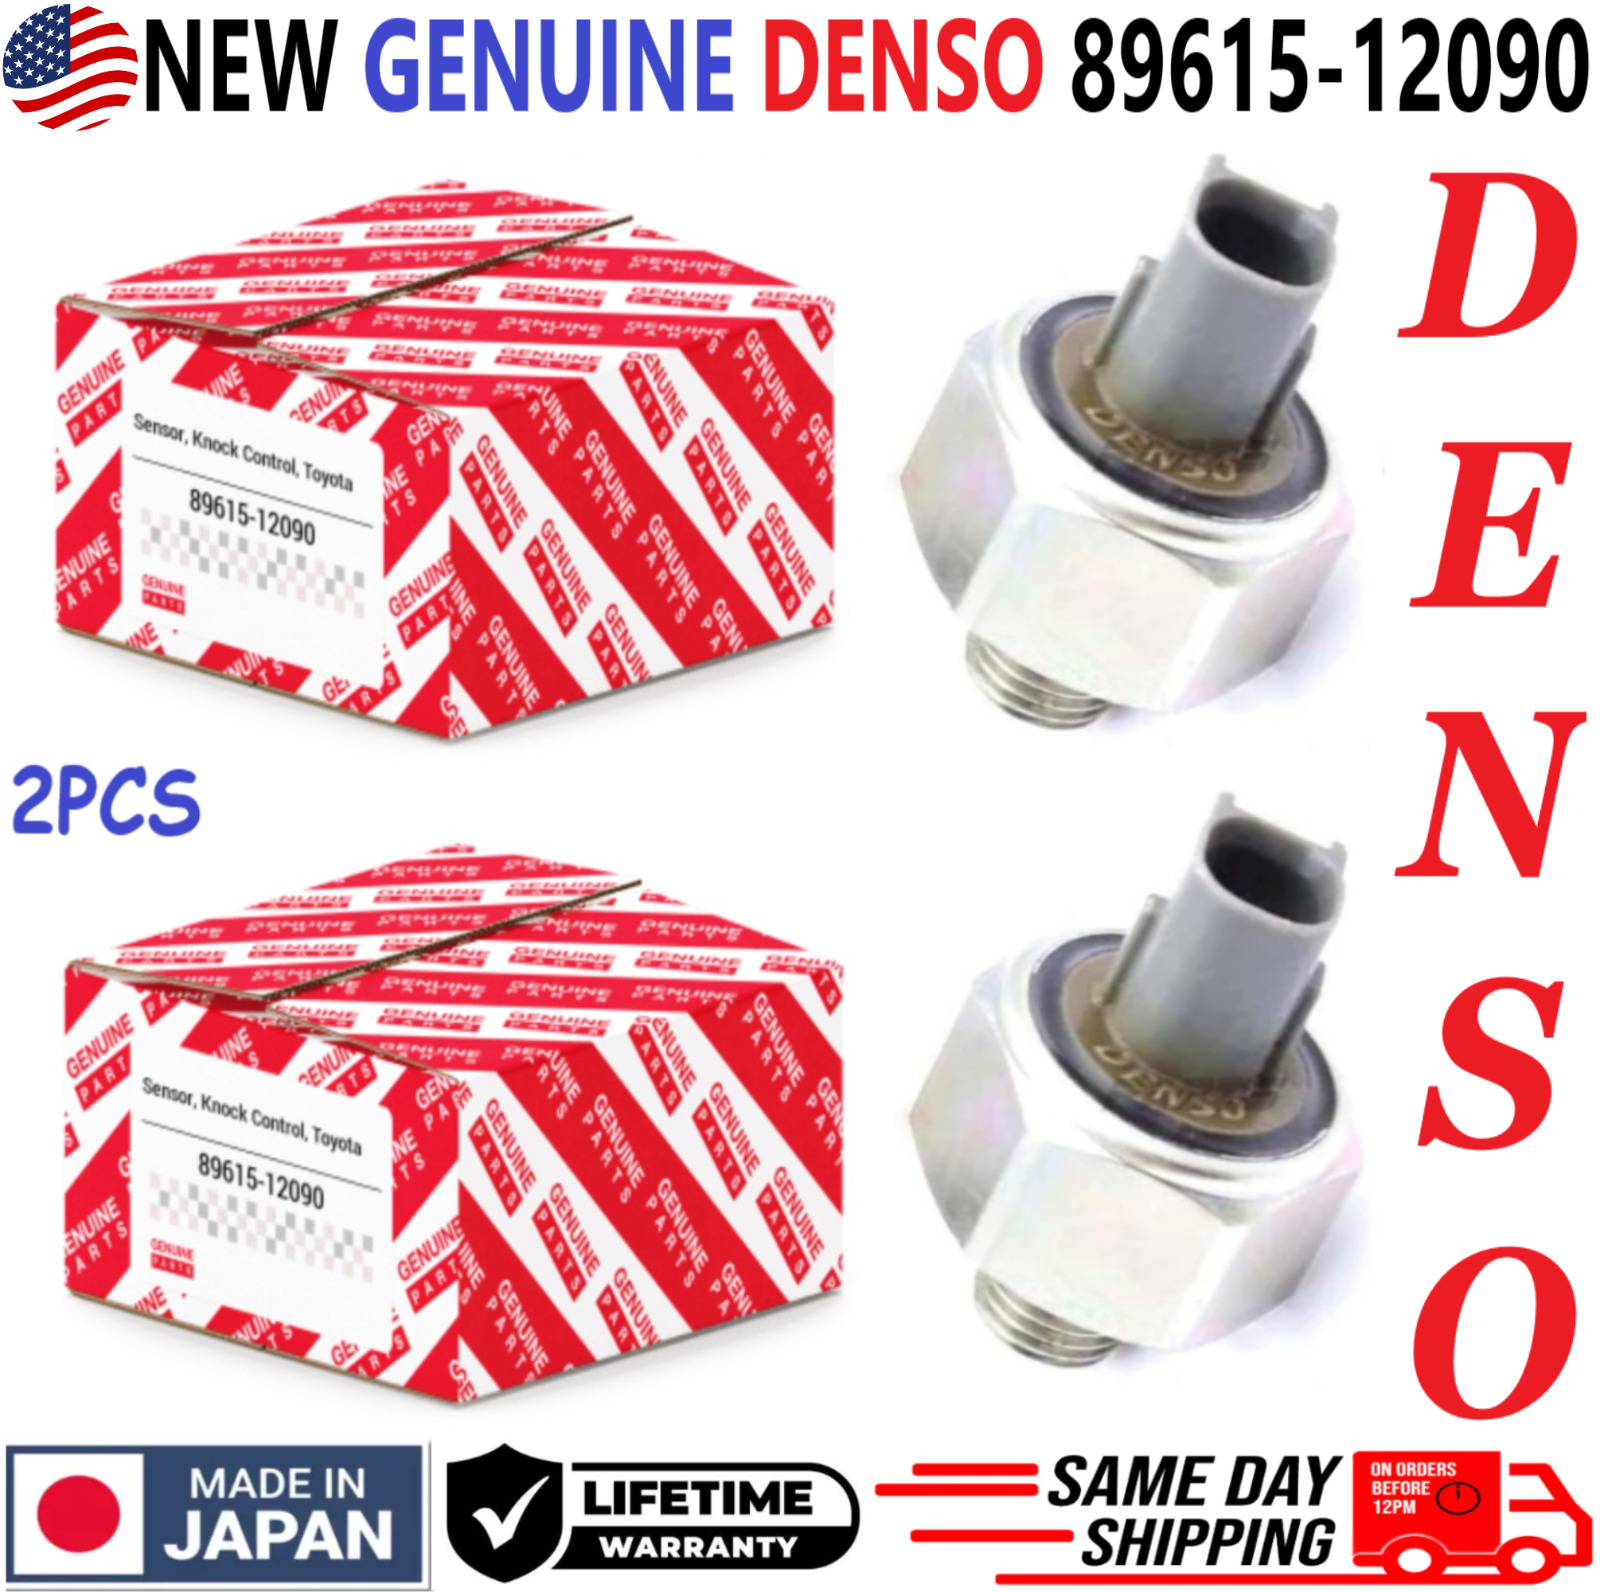 GENUINE DENSO x2 Engine Knock Sensors For 1992-2004 Toyota & Lexus, 89615-12090